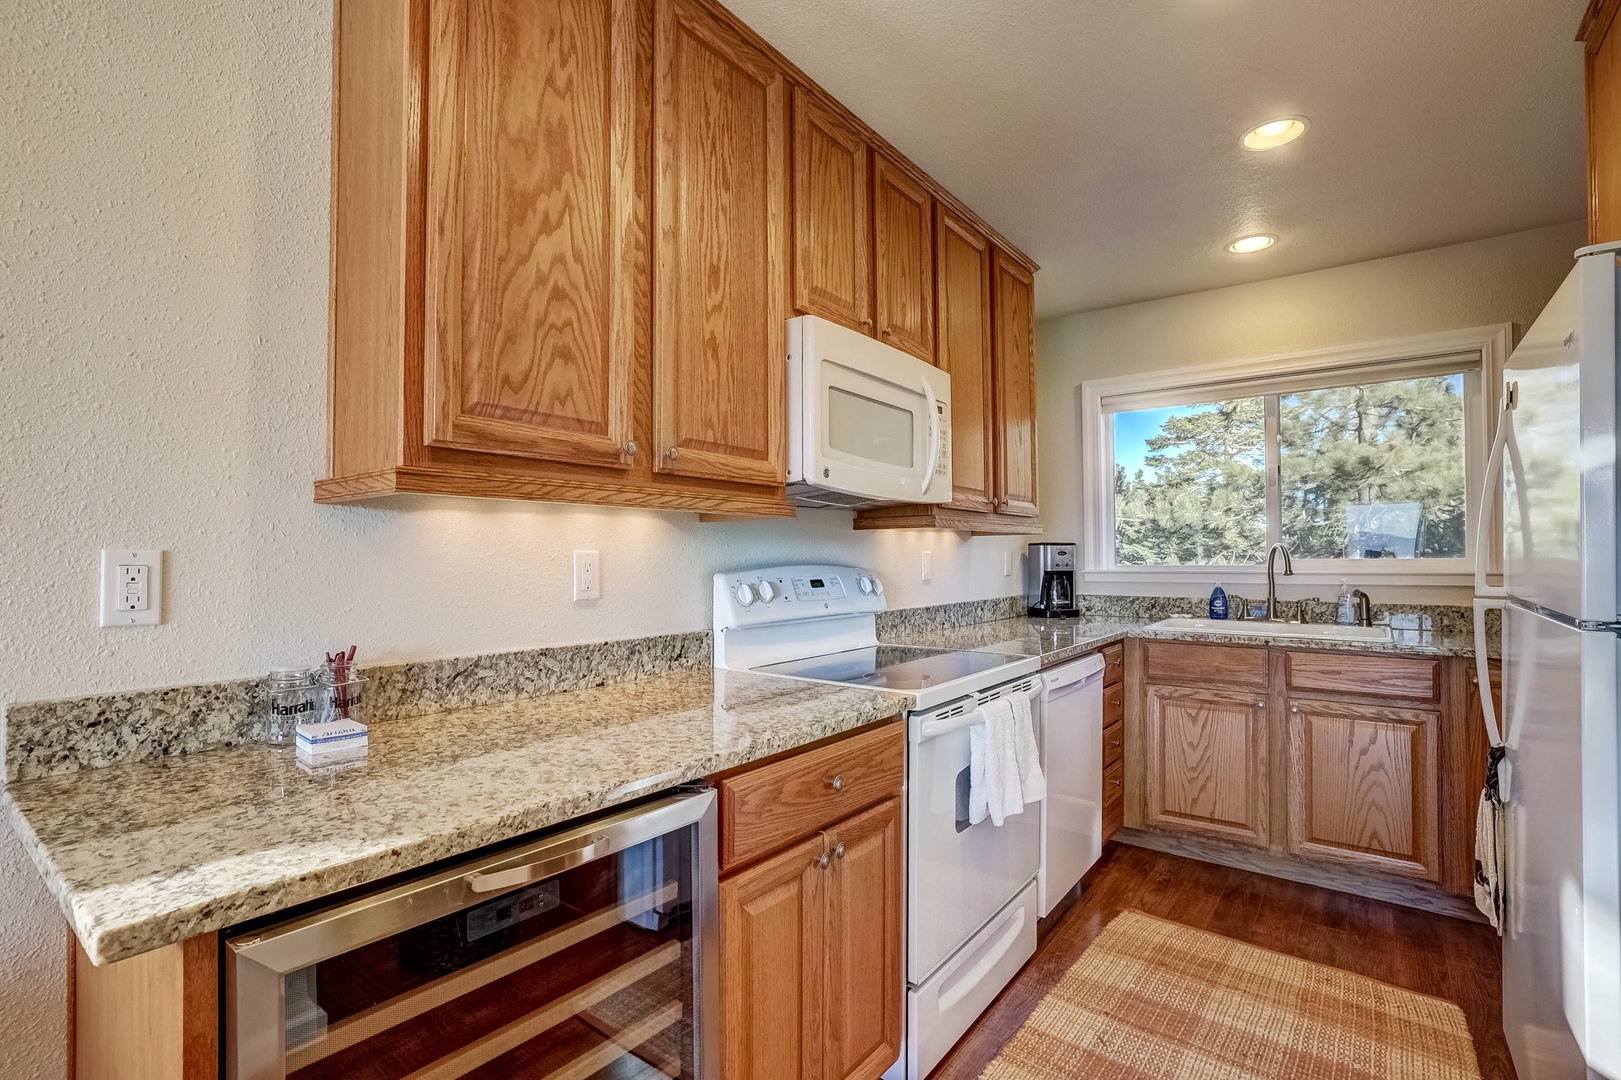 Full kitchen with wine fridge, dishwasher, and standard drip coffee maker